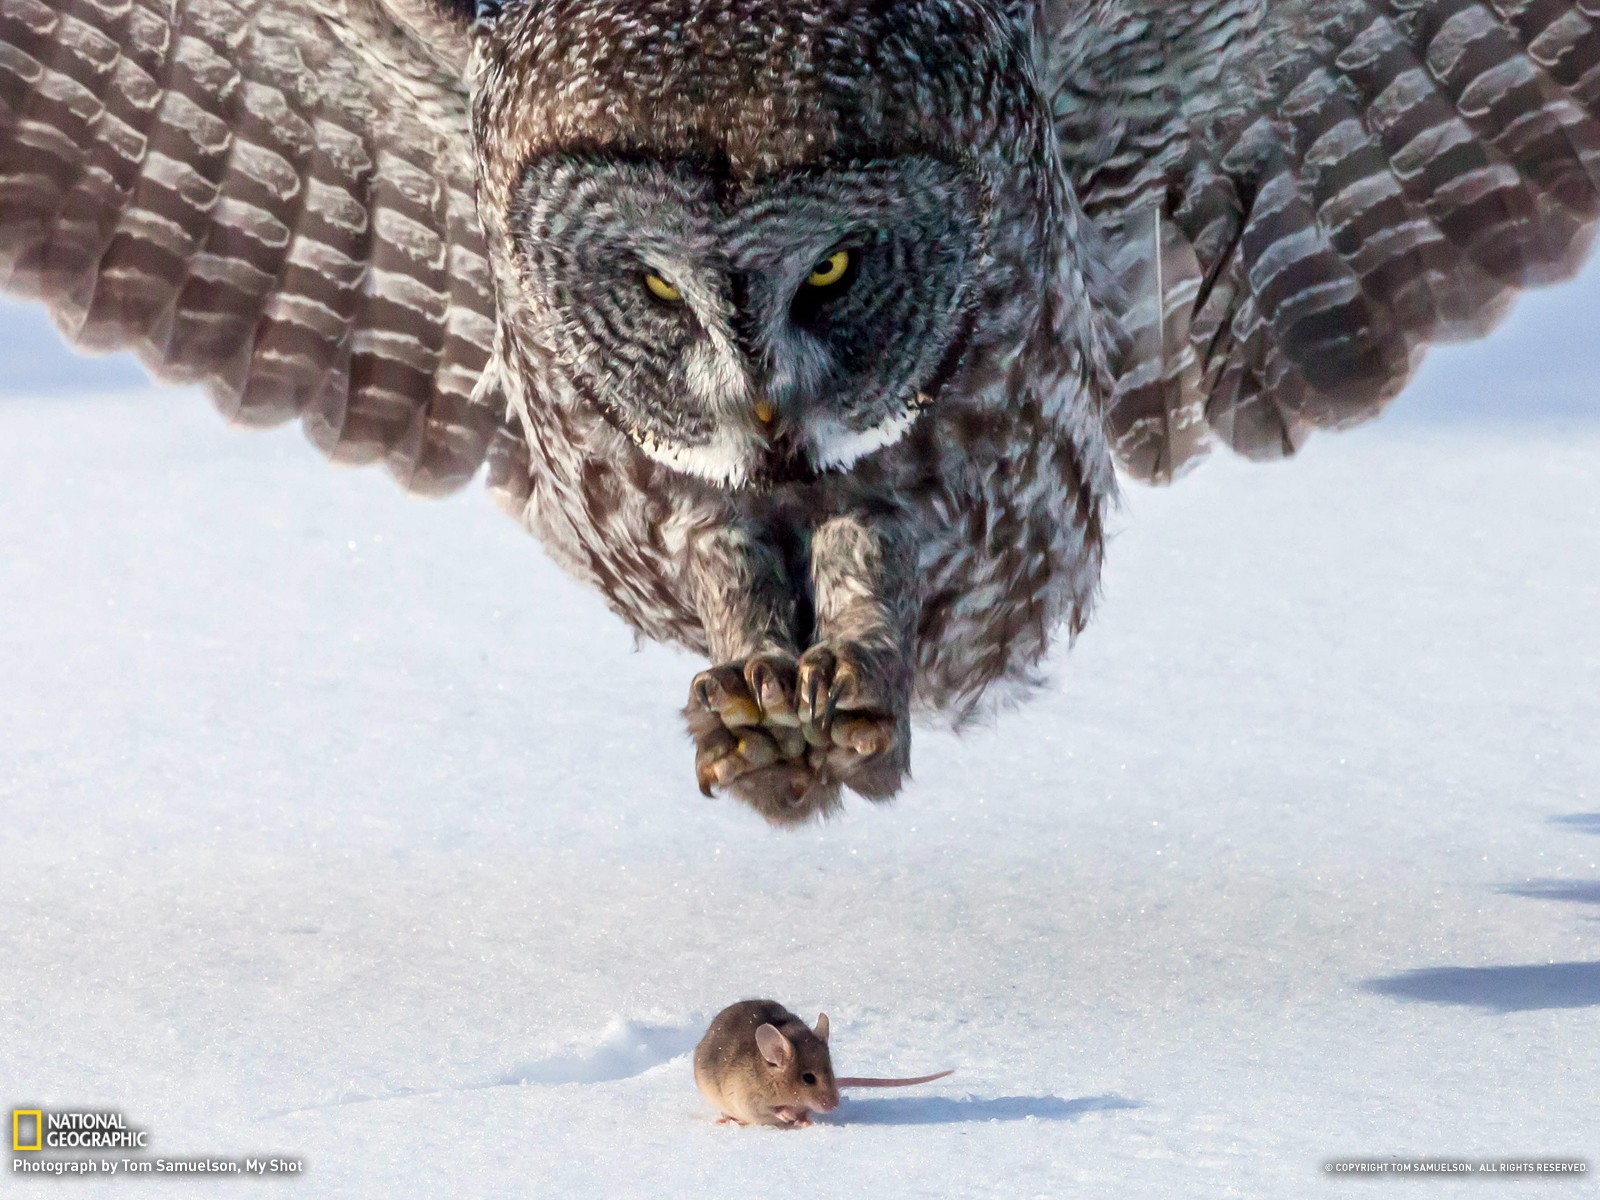 General 1600x1200 owl National Geographic birds snow mice winter wildlife animals mammals closeup watermarked